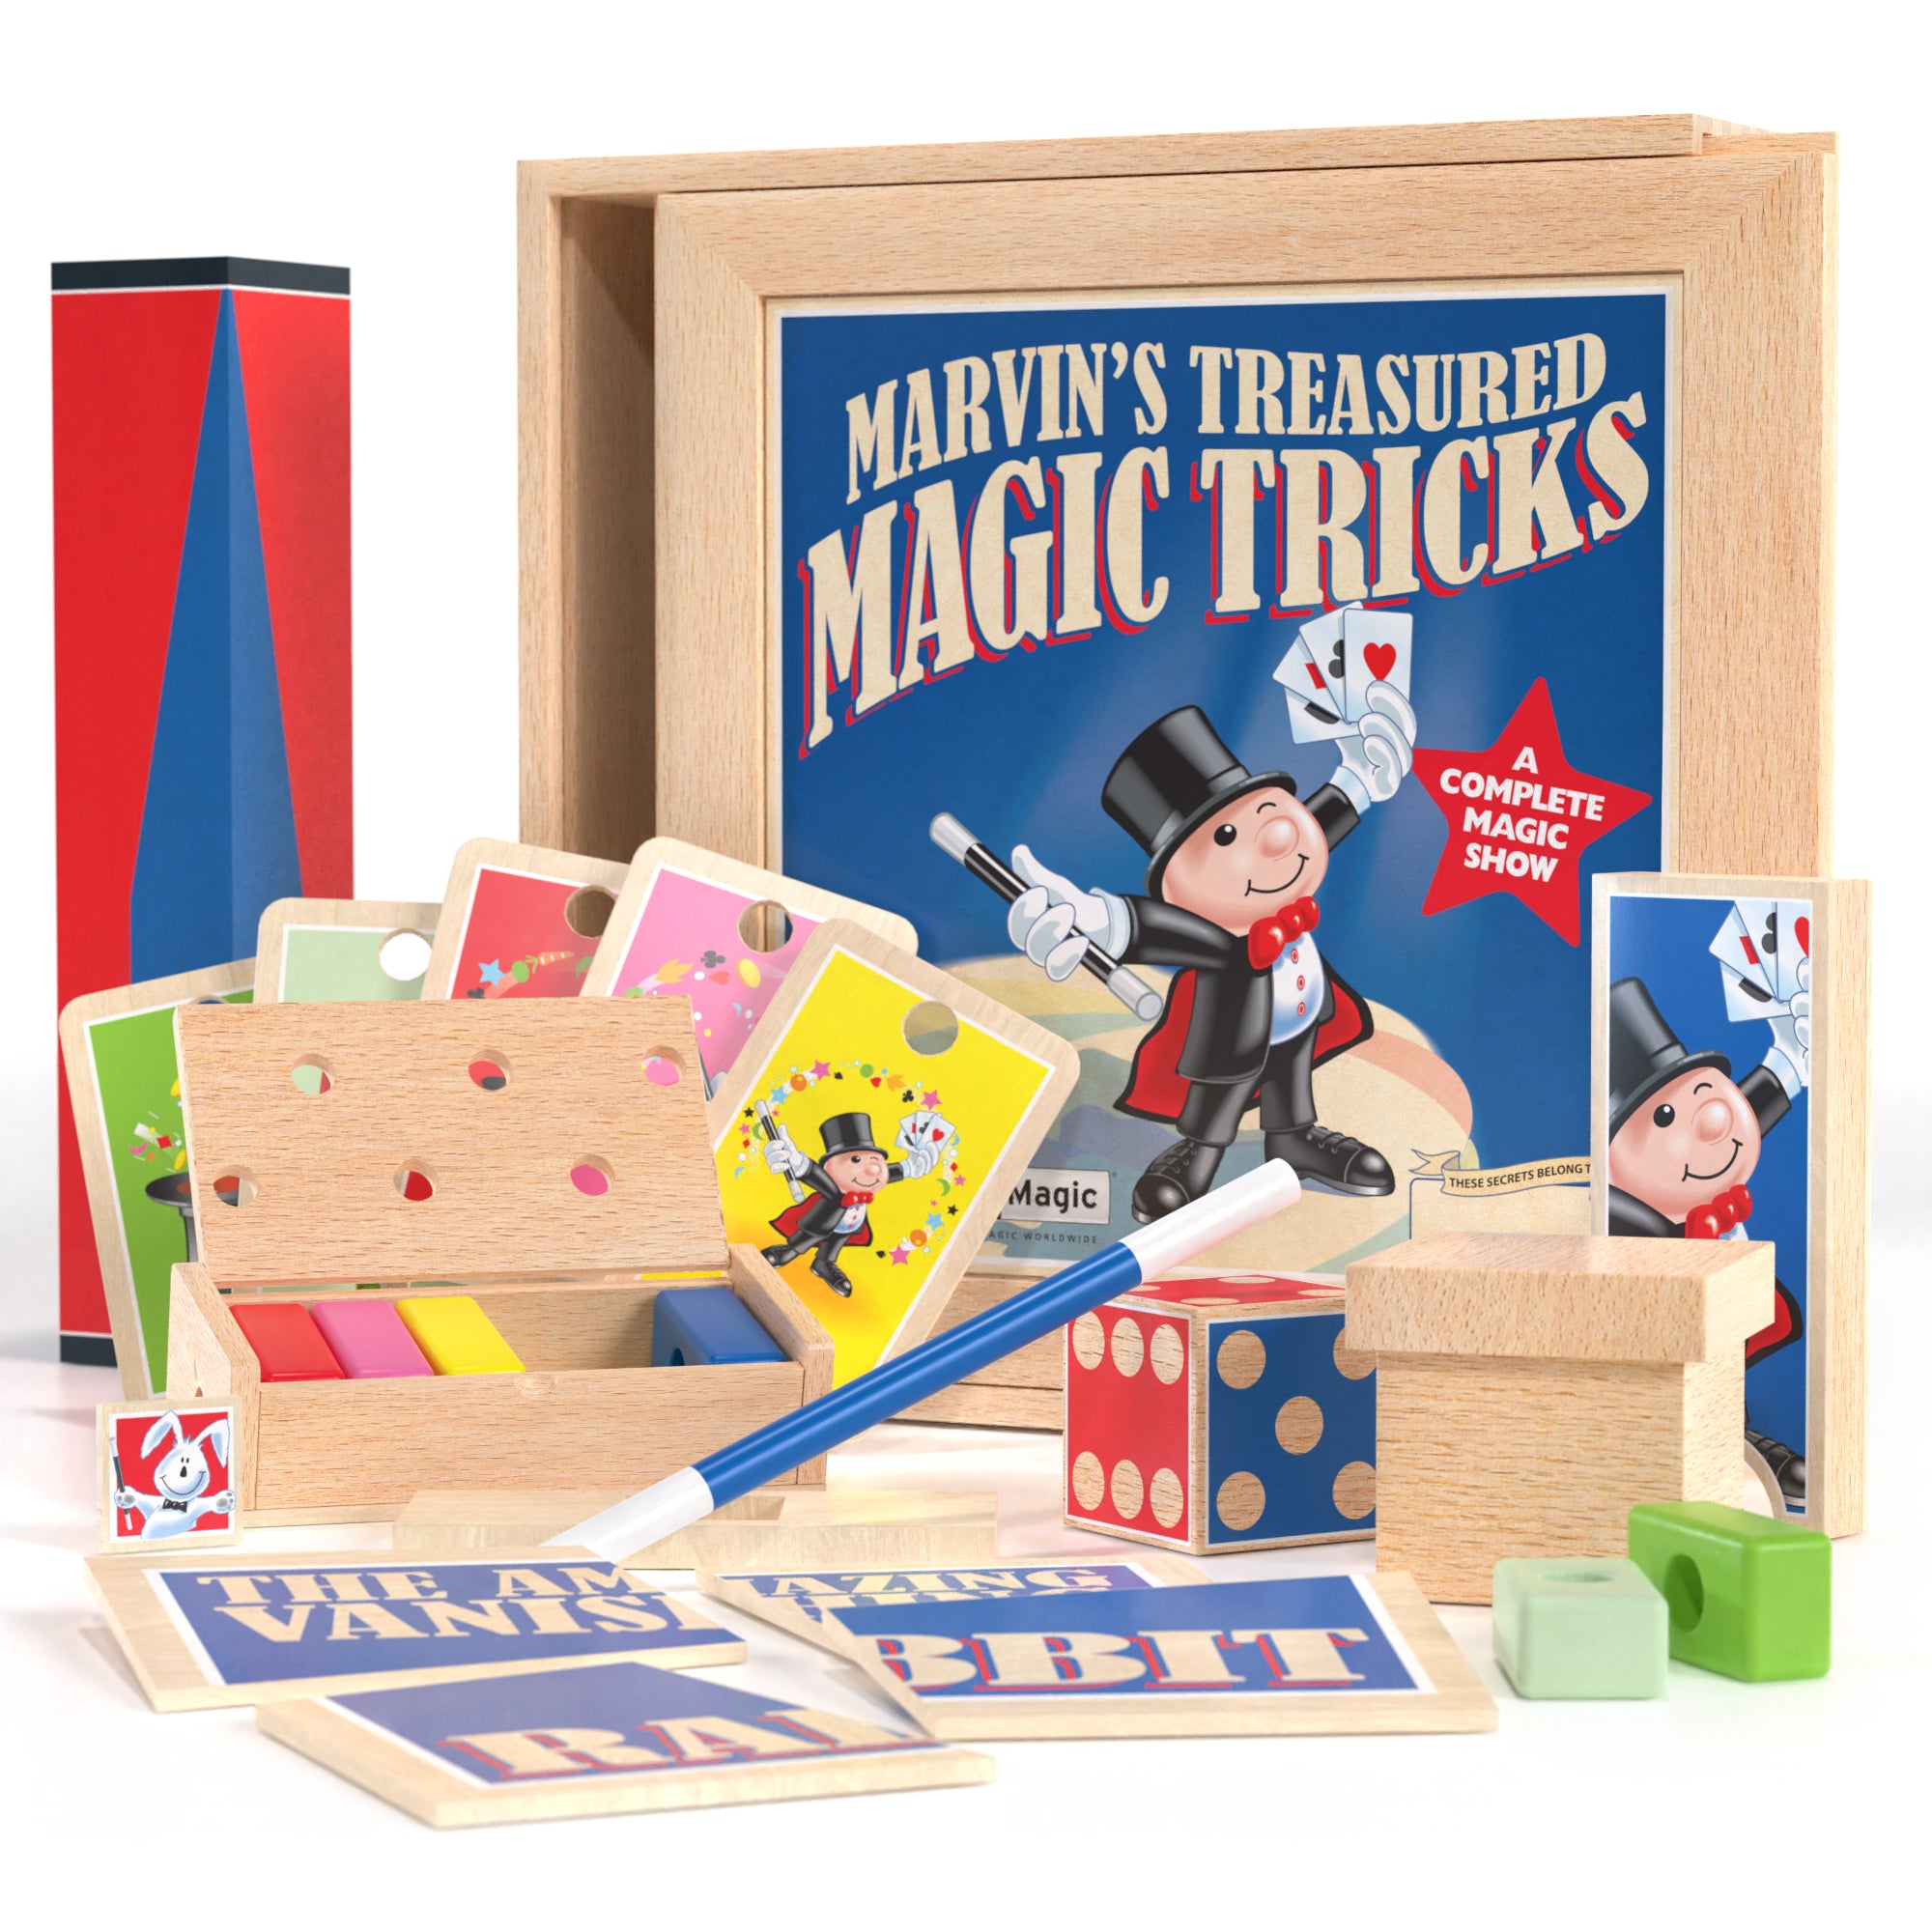 Marvin's Magic - Kids Magic Set - 365 Ultimate Magic Tricks & Illusions |  Magic Tricks for Kids | Includes Svengali Cards, Flash Money Trick, Mind